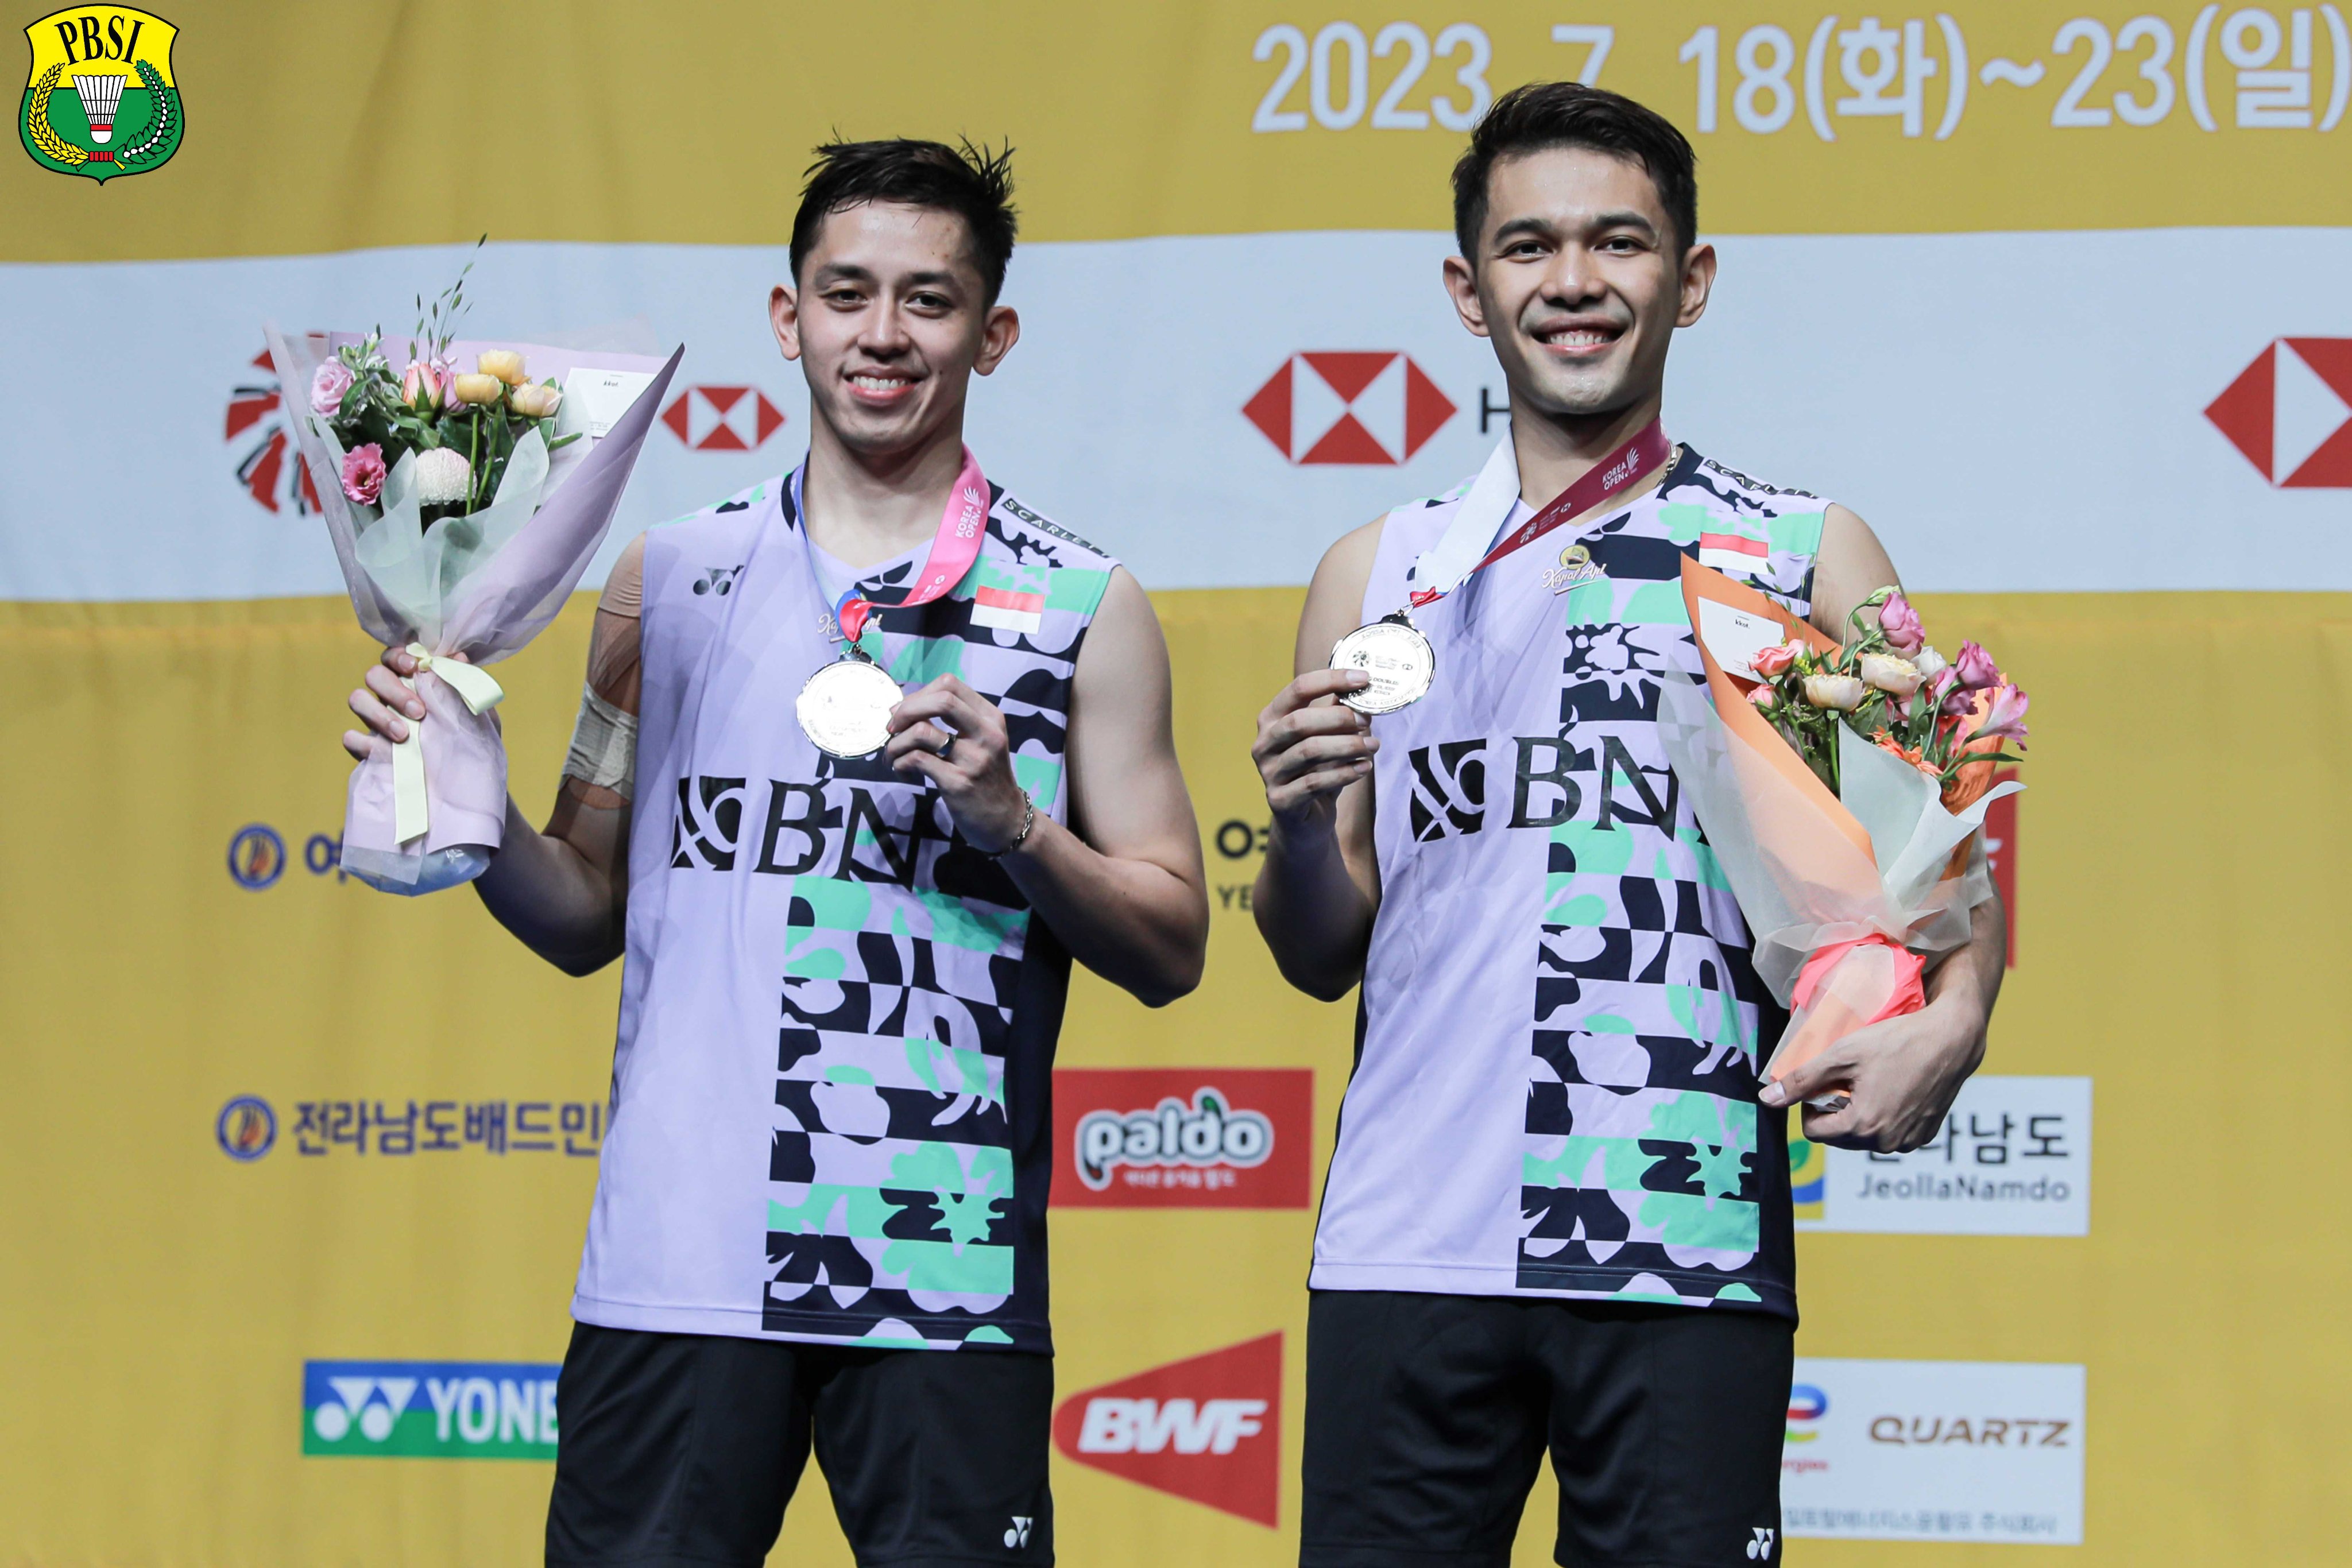 Fajar/Rian Tumbang, Indonesia Tanpa Gelar di Korea Open 2023